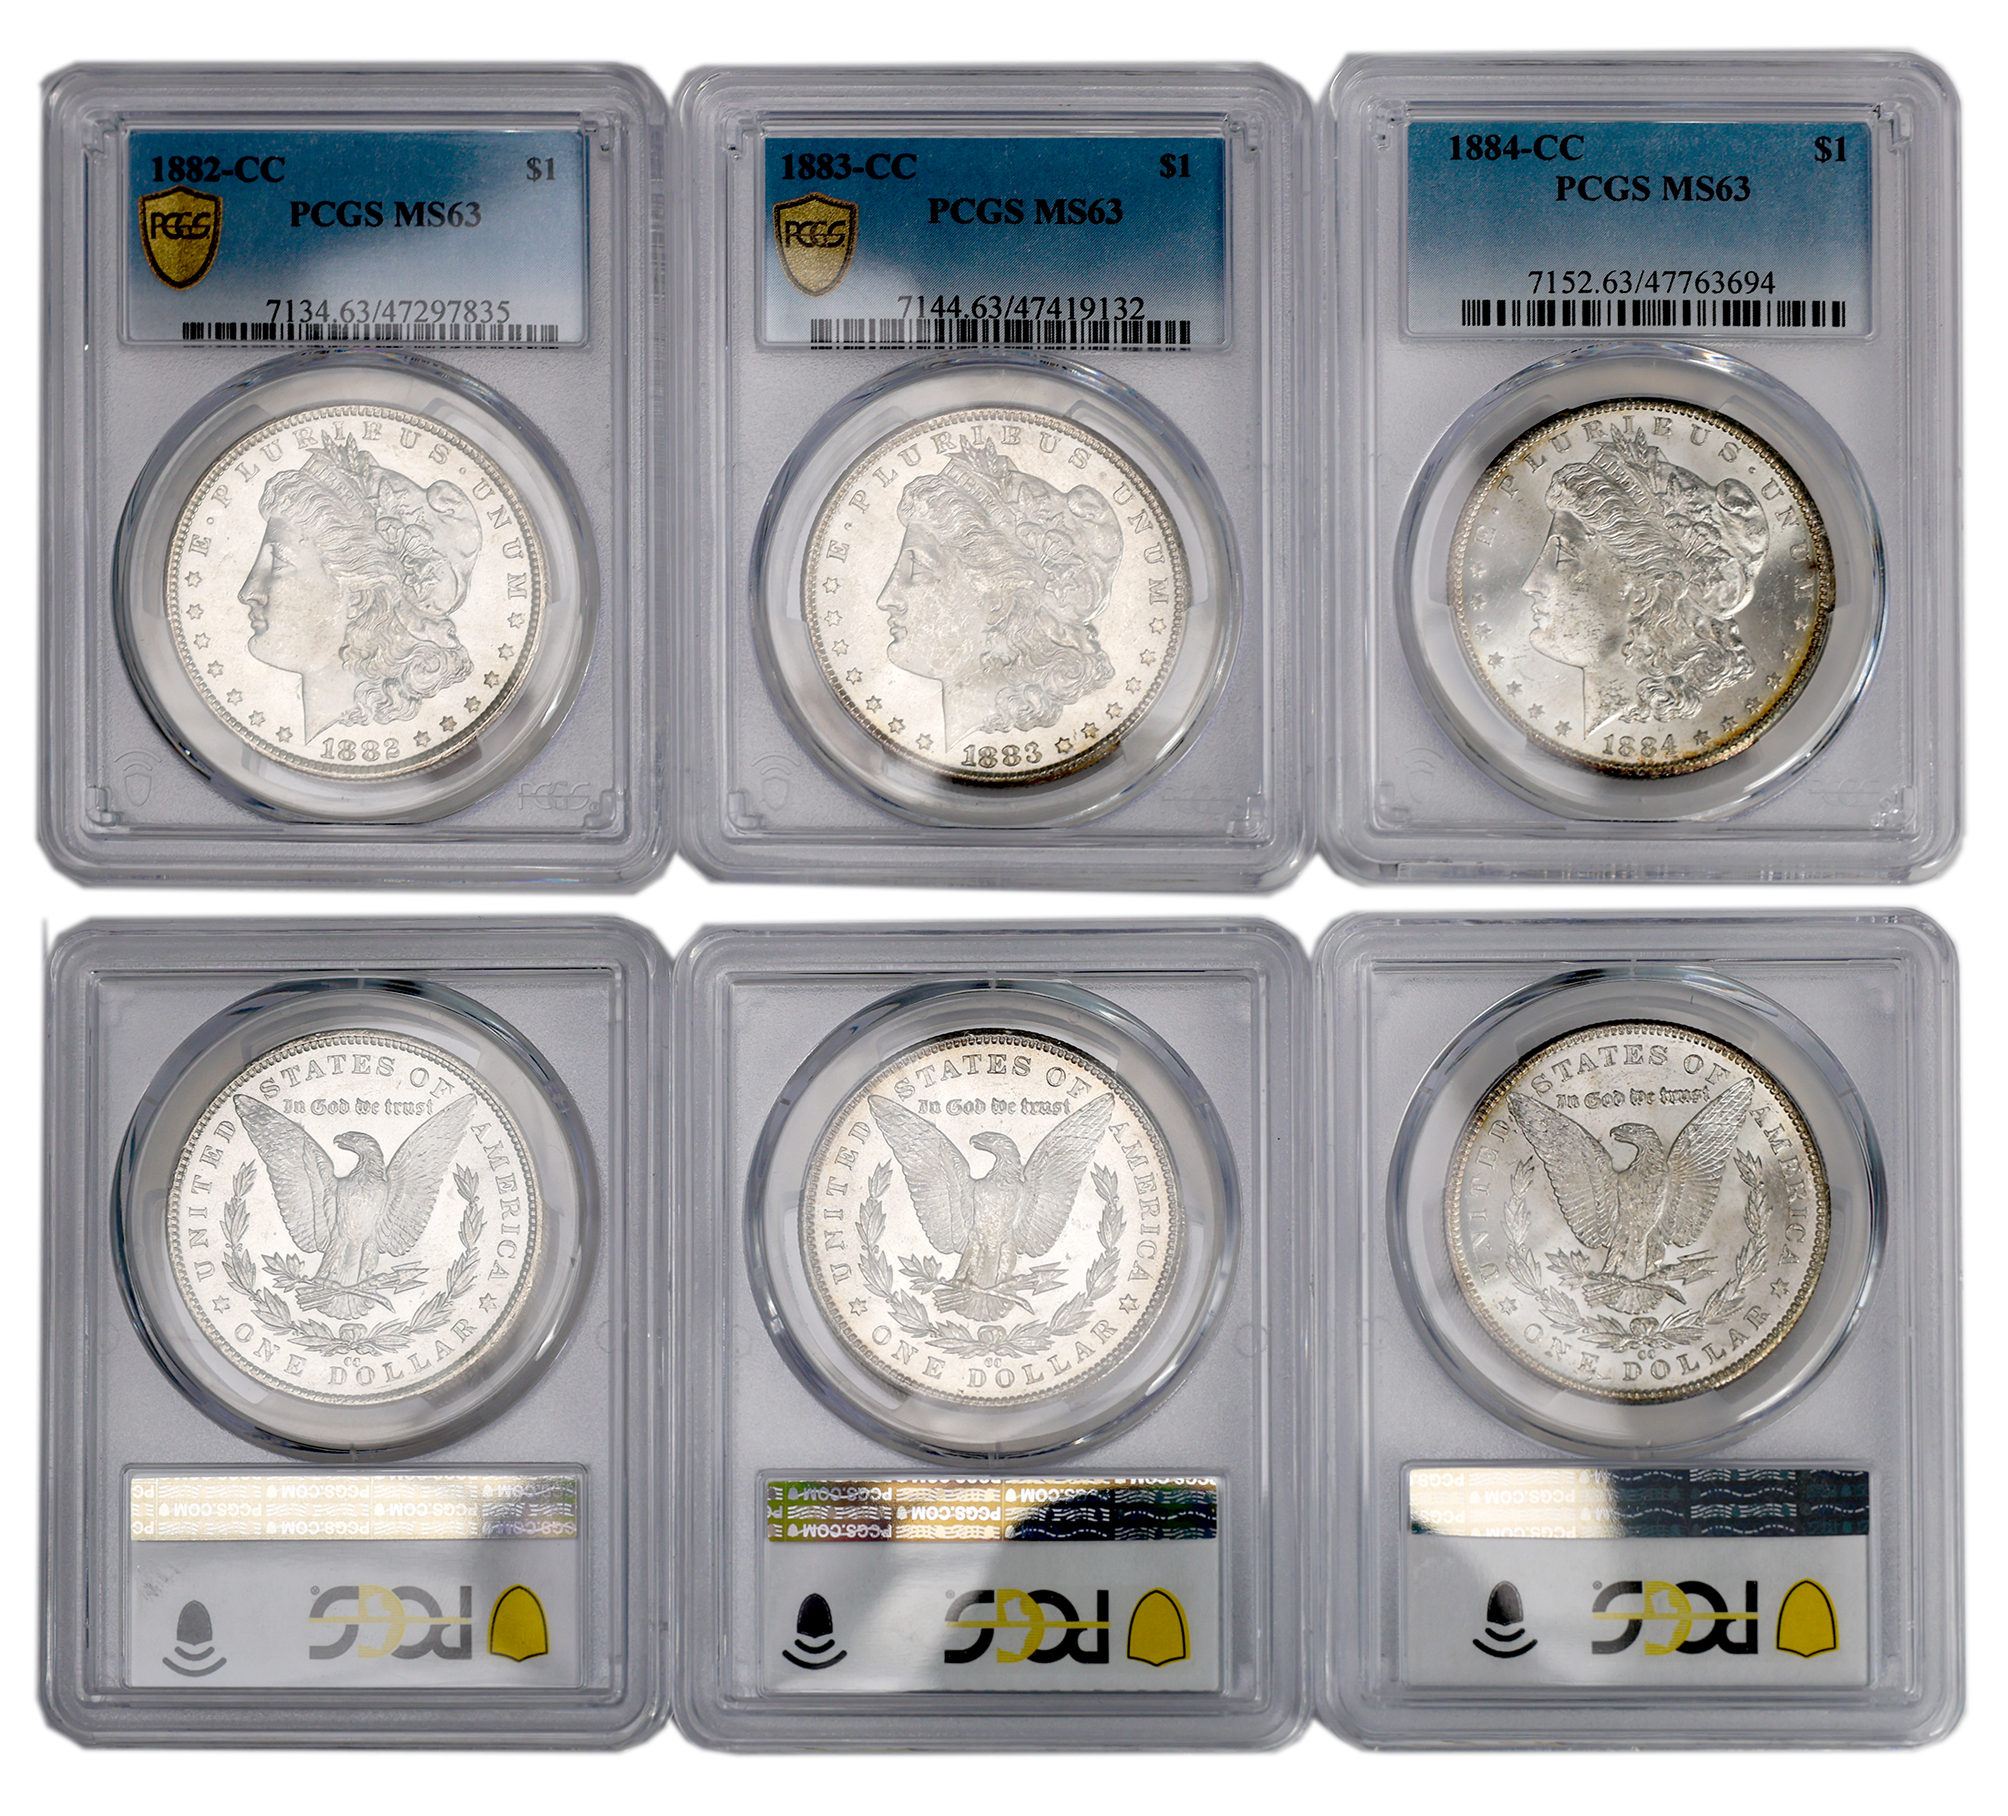 3-Piece Morgan Dollar-CC Set 1882-1884 PCGS MS63